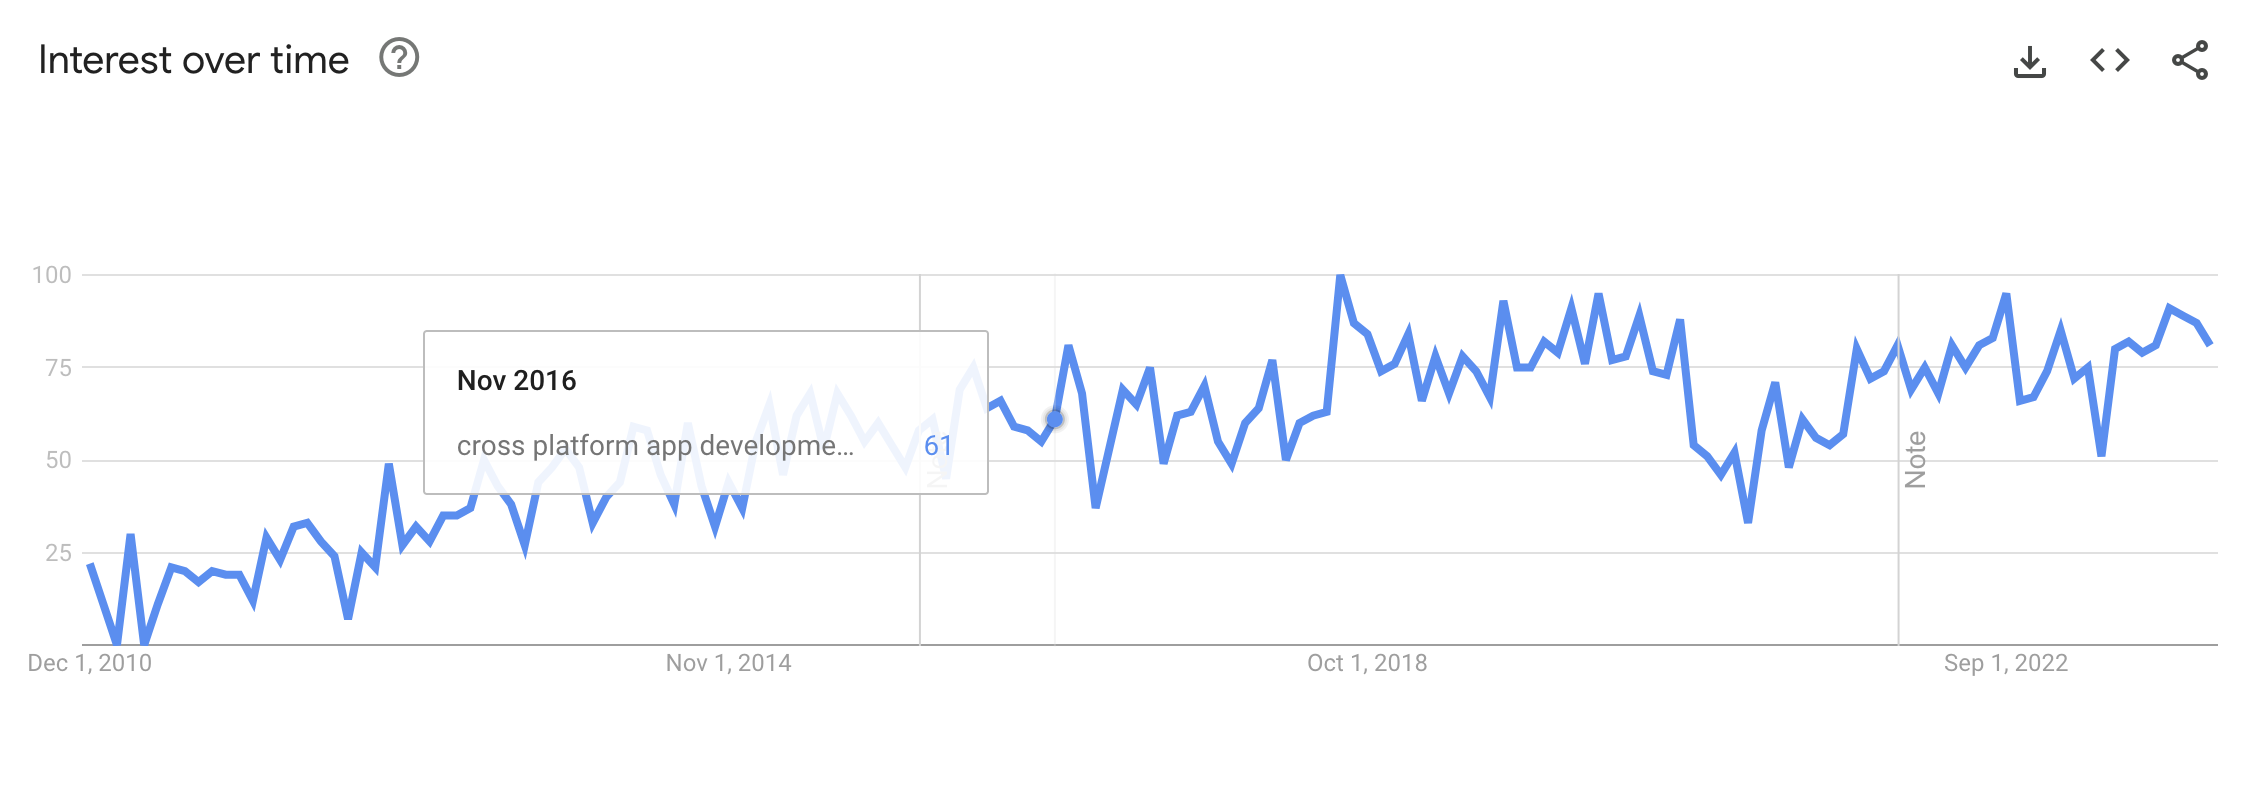 Google Trends chart illustrating the interest in cross-platform app development